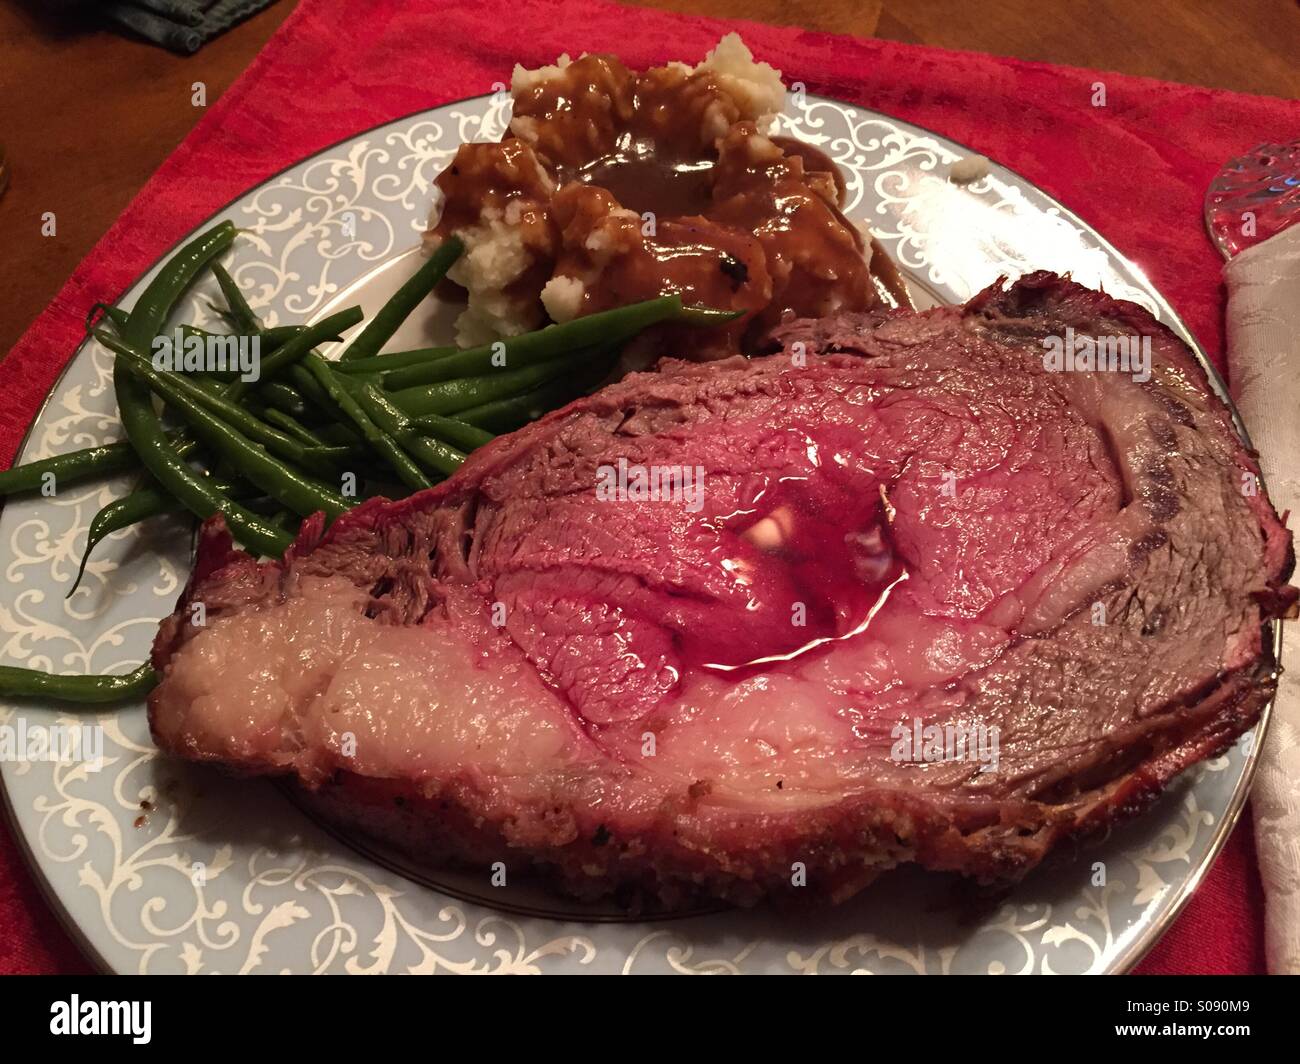 https://c8.alamy.com/comp/S090M9/christmas-dinner-plate-prime-rib-roast-with-au-jus-S090M9.jpg